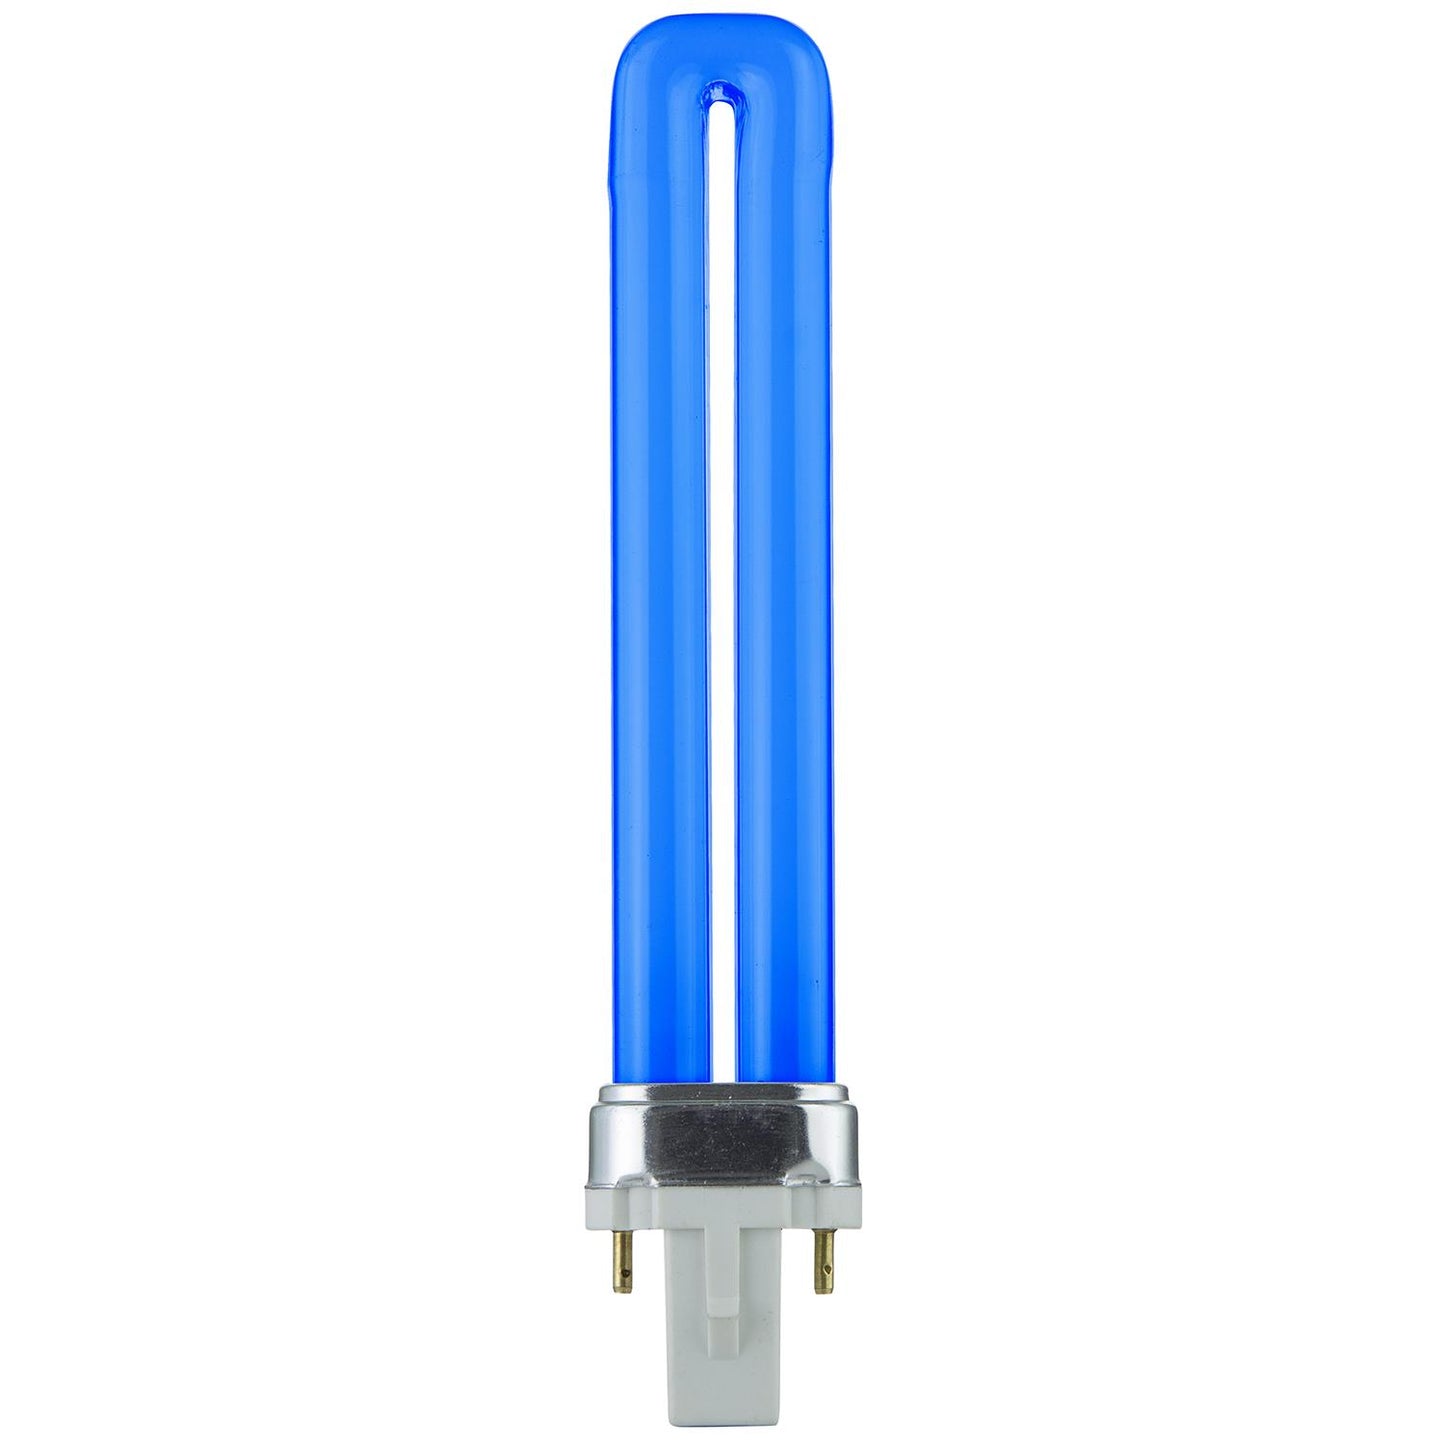 Sunlite 9 Watt PL 2-Pin Single U-Shaped Twin Tube, G23 Base, Blue